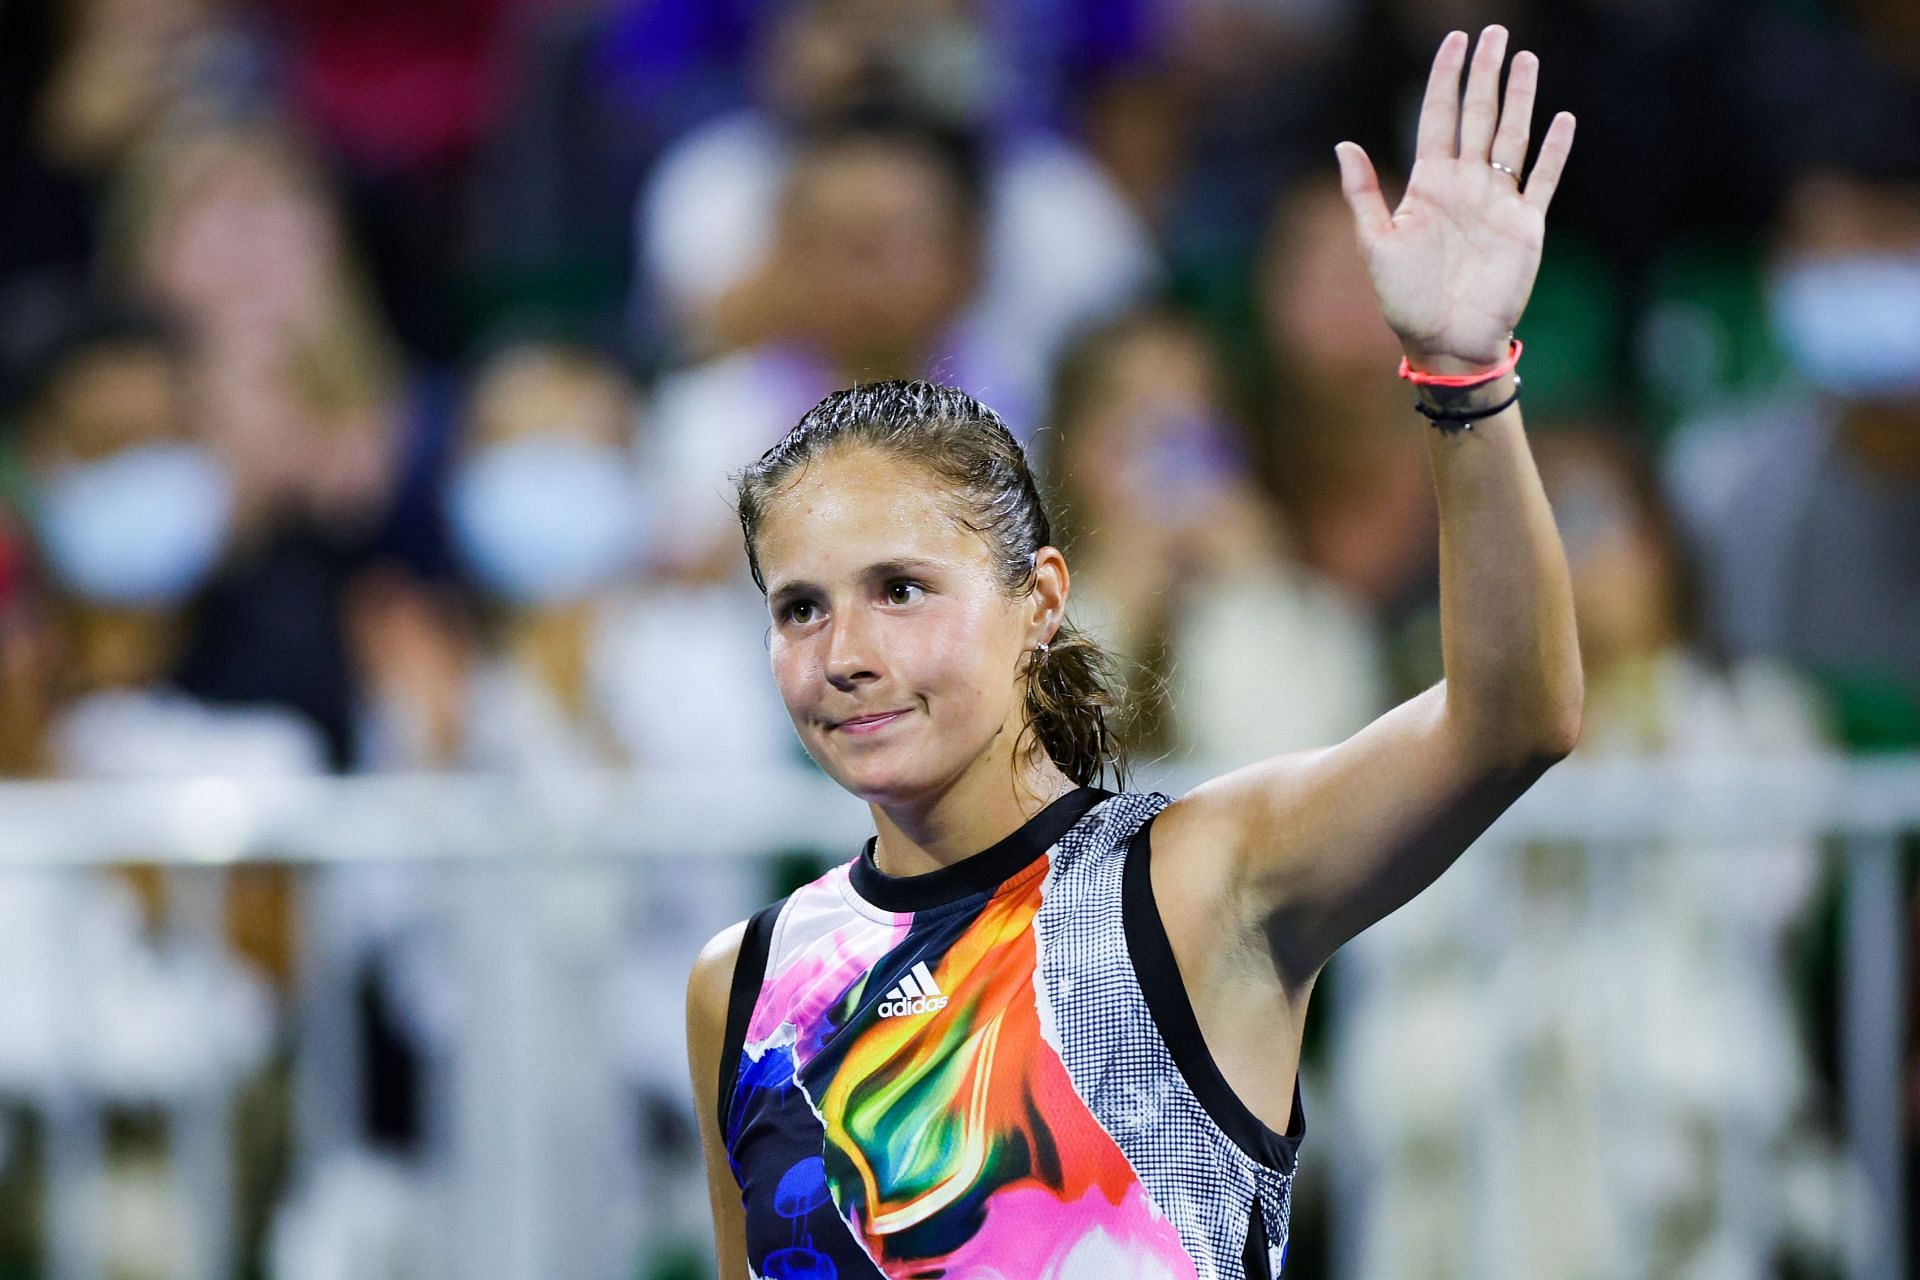 Kasatkina outsmarts the Wimbledon champion, Elena Rybakina, 1-6, 6-2, 6-0, to reach the round of 16